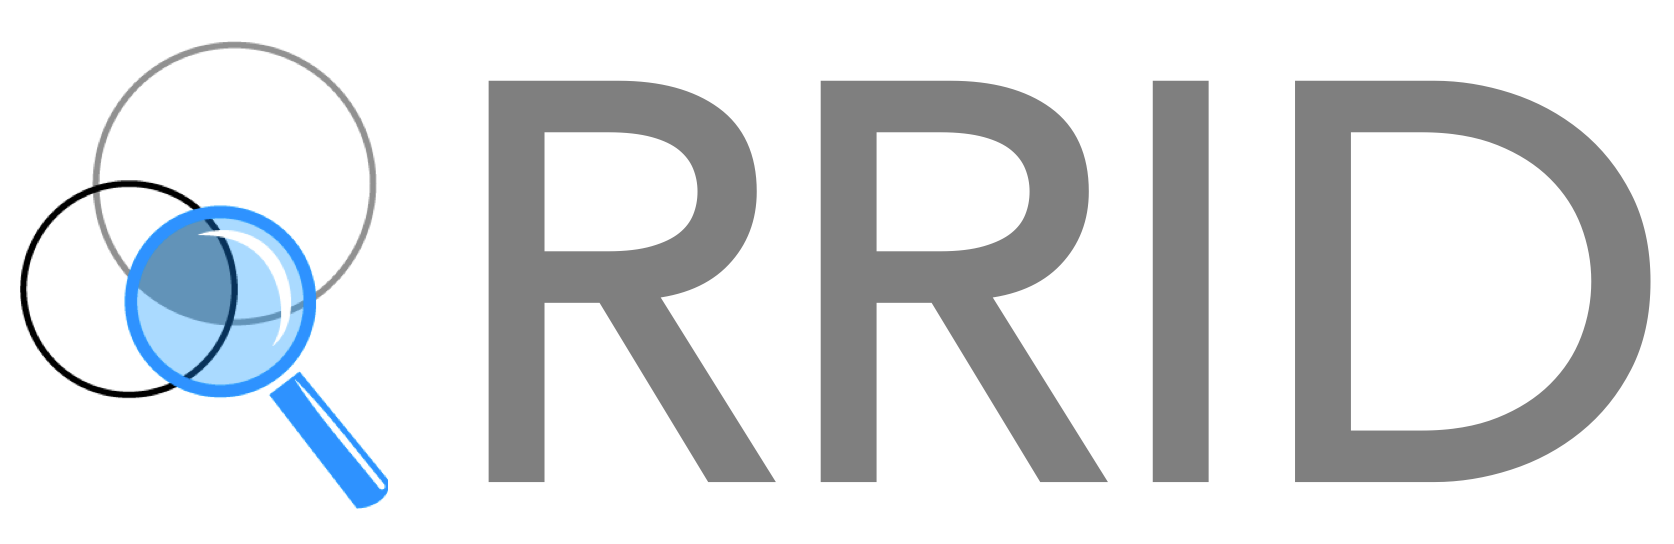 Research Resource identifier (RRID) logo